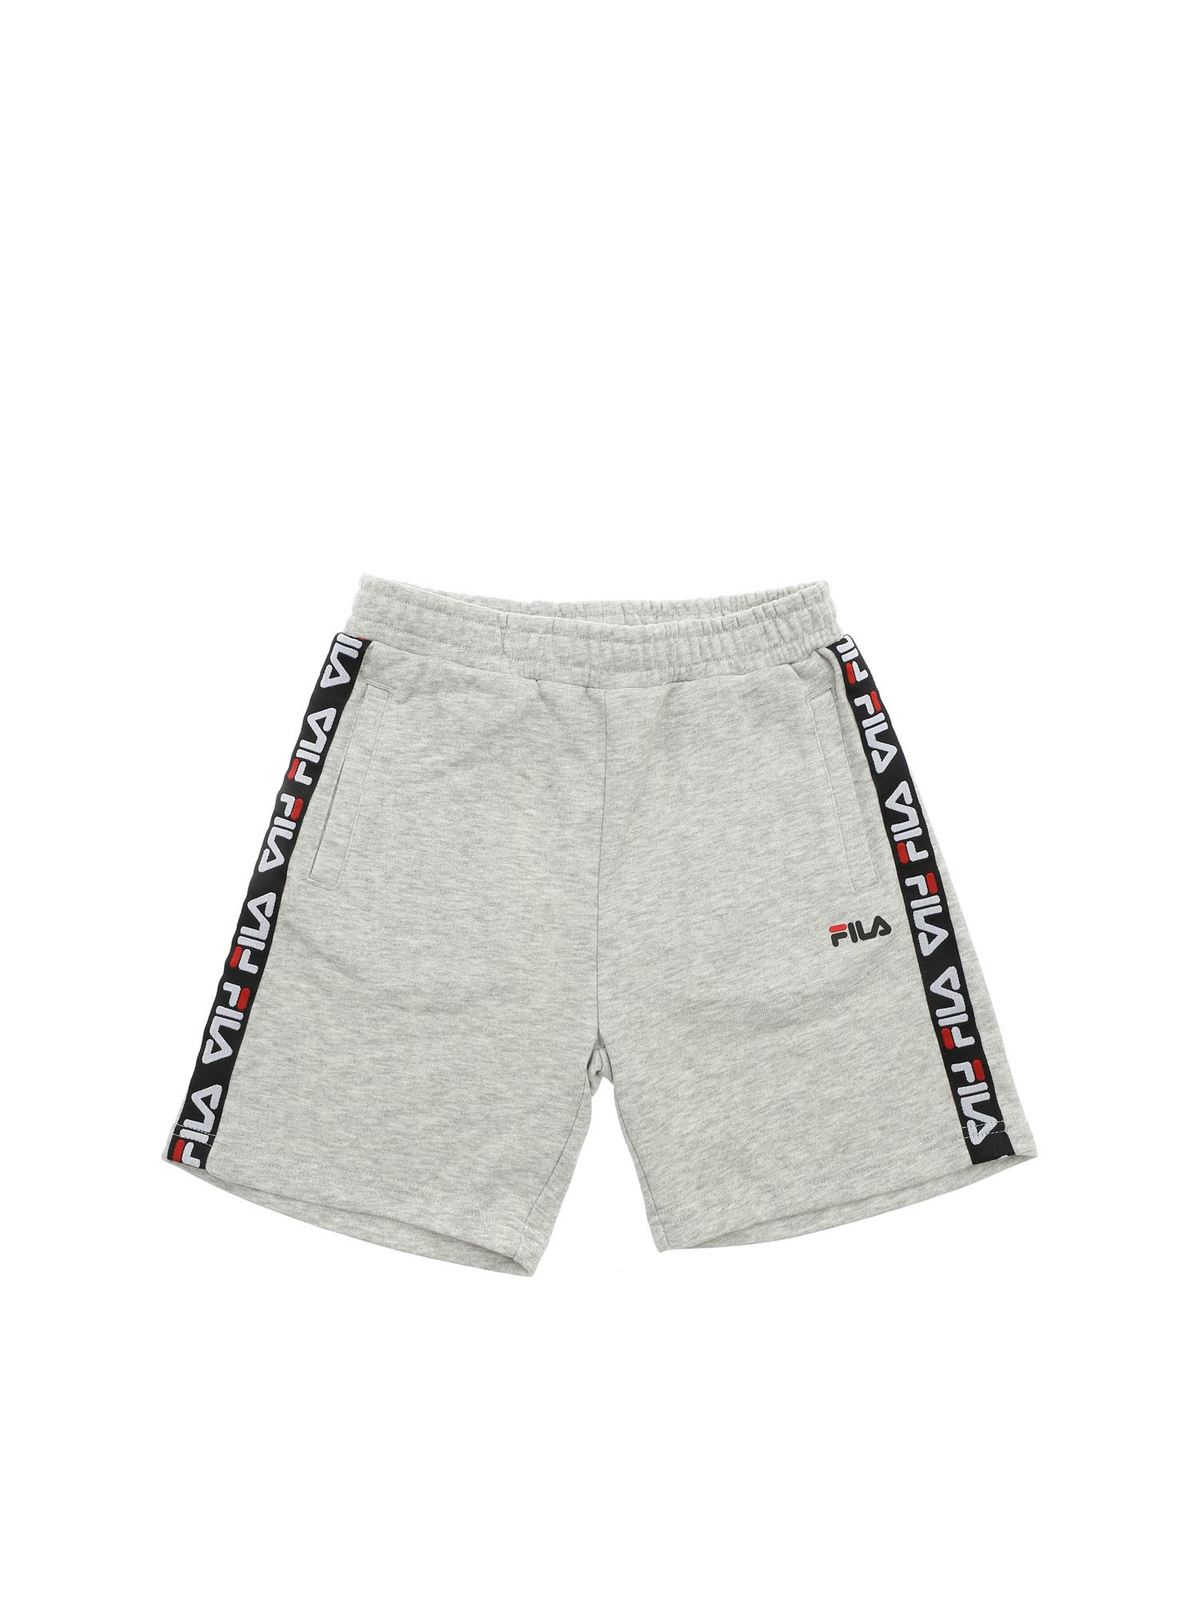 Pantalones Fila - Shorts - Gris - 687668B13 | iKRIX online